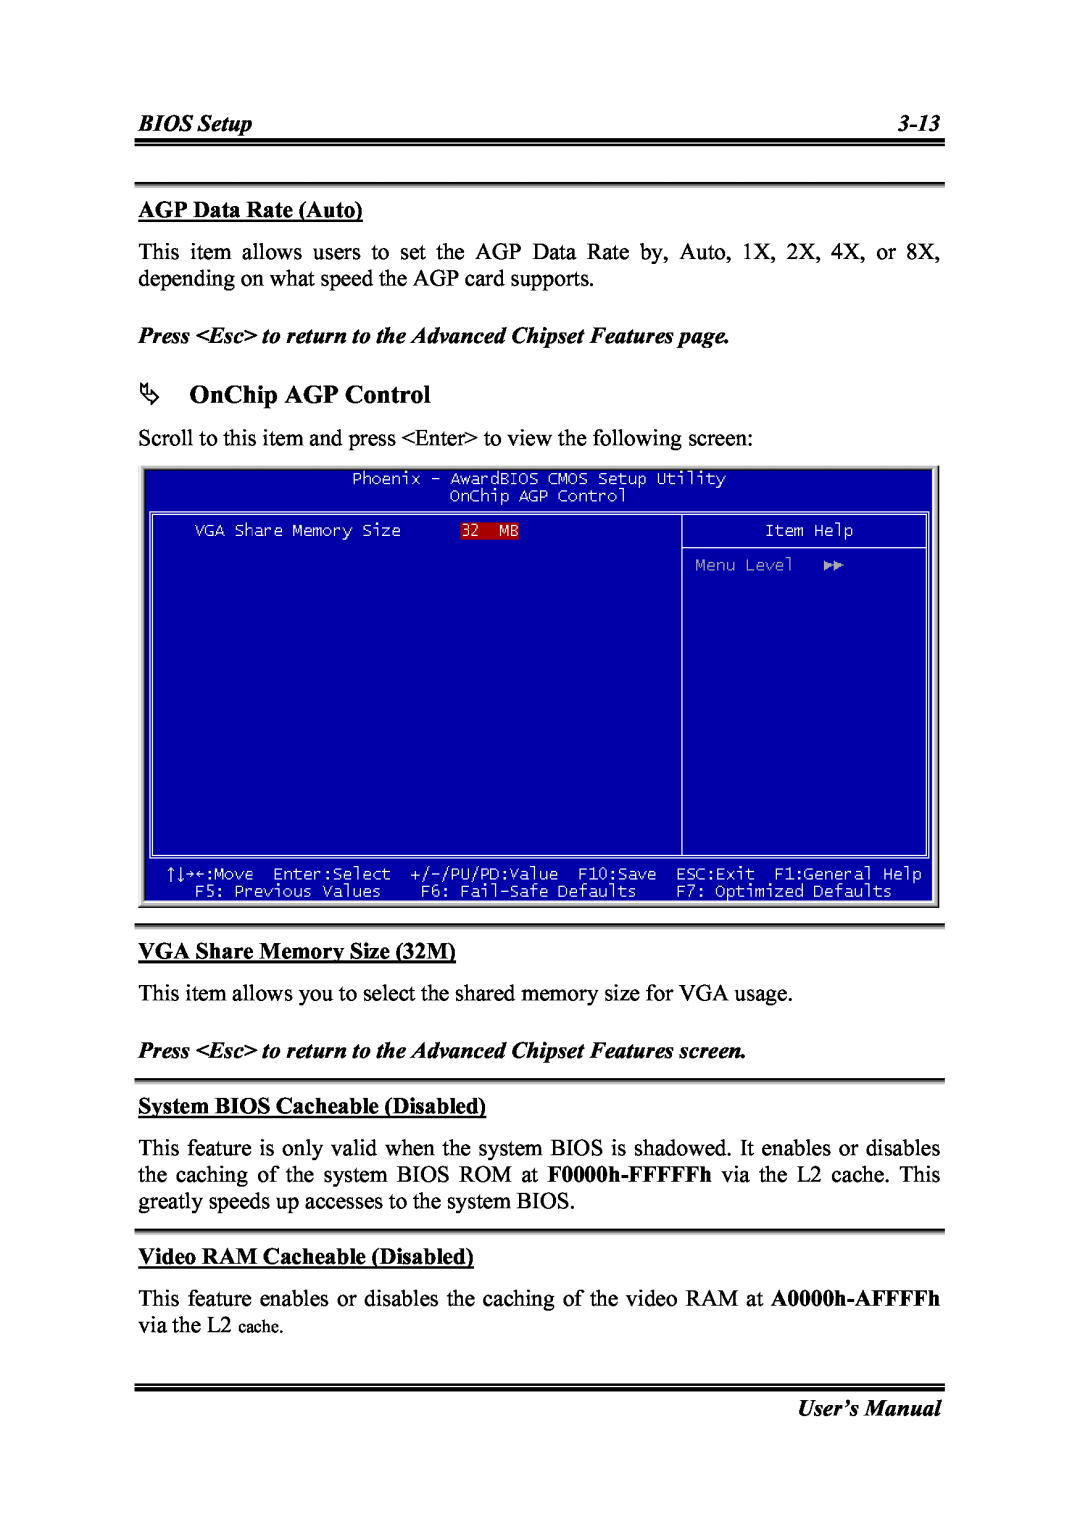 Intel SG-81, SG-80 user manual OnChip AGP Control 